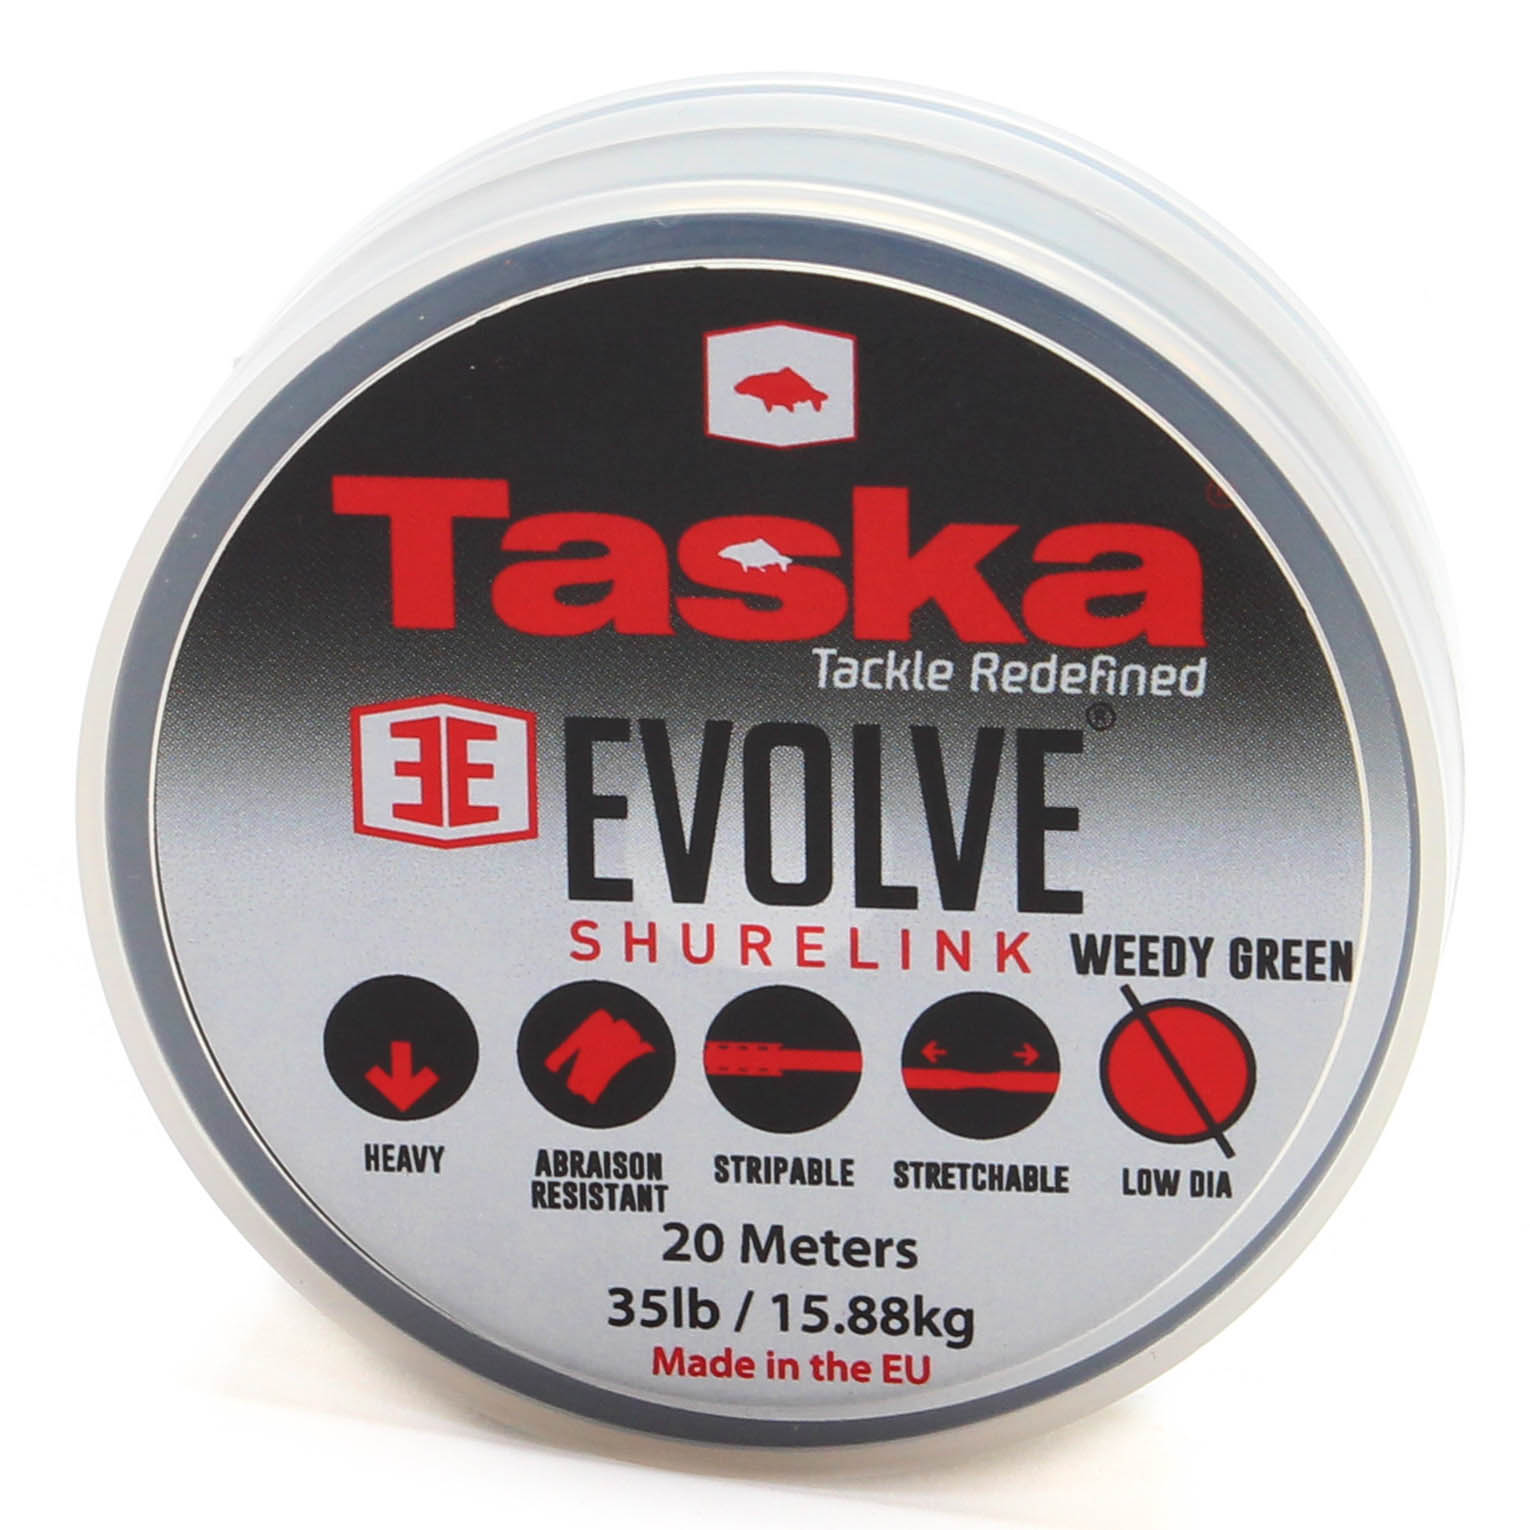 Taska Evolve - Shurelink komb. návazcový materiál hnědý 20m 20lb